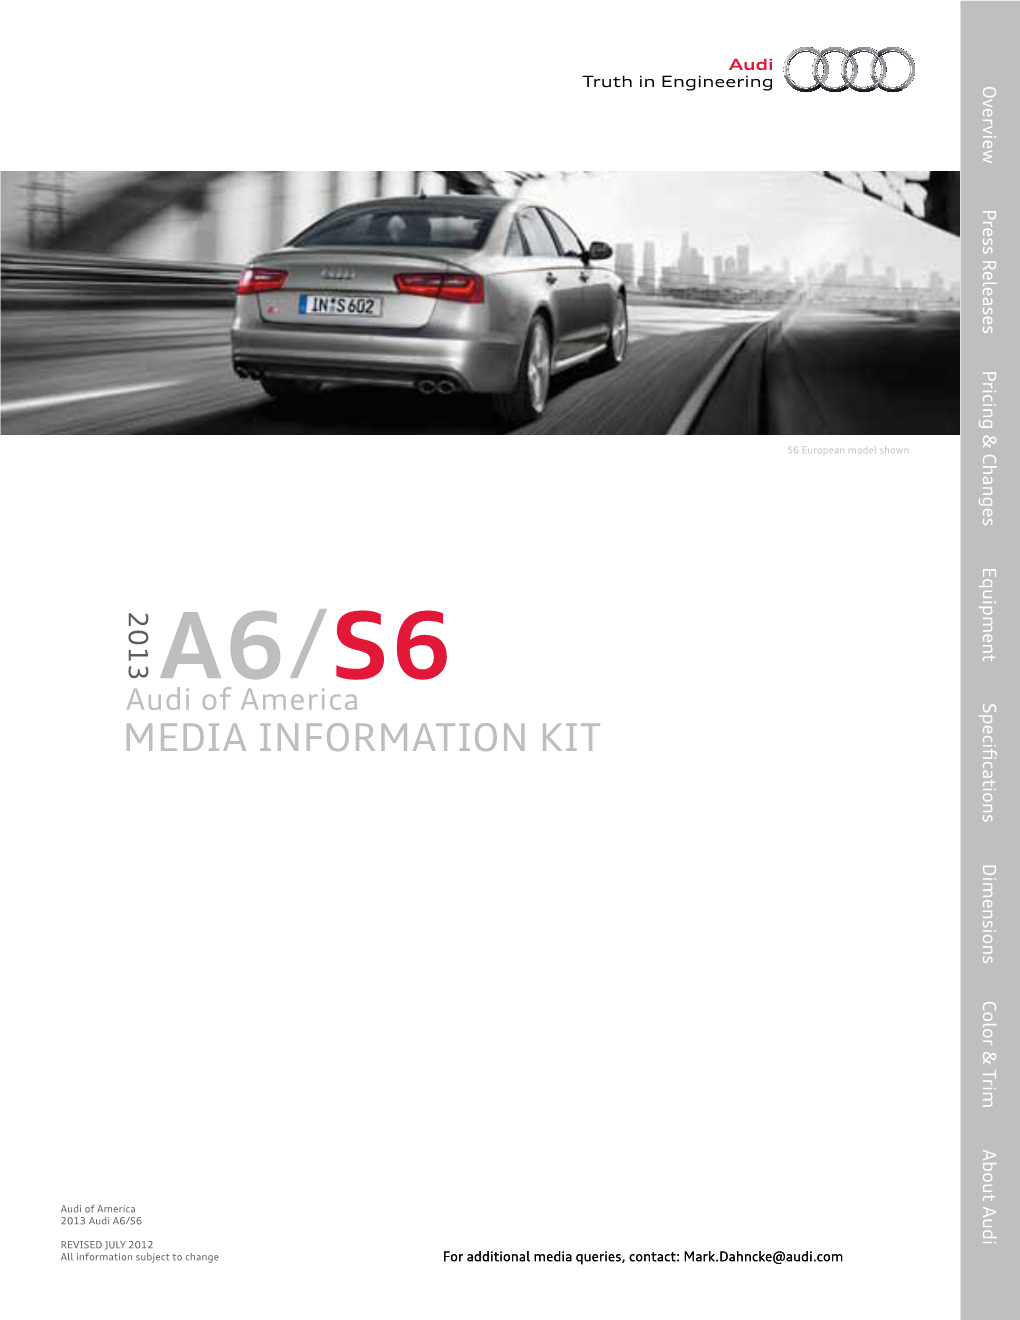 2013 Audi A6/S6 Media Information